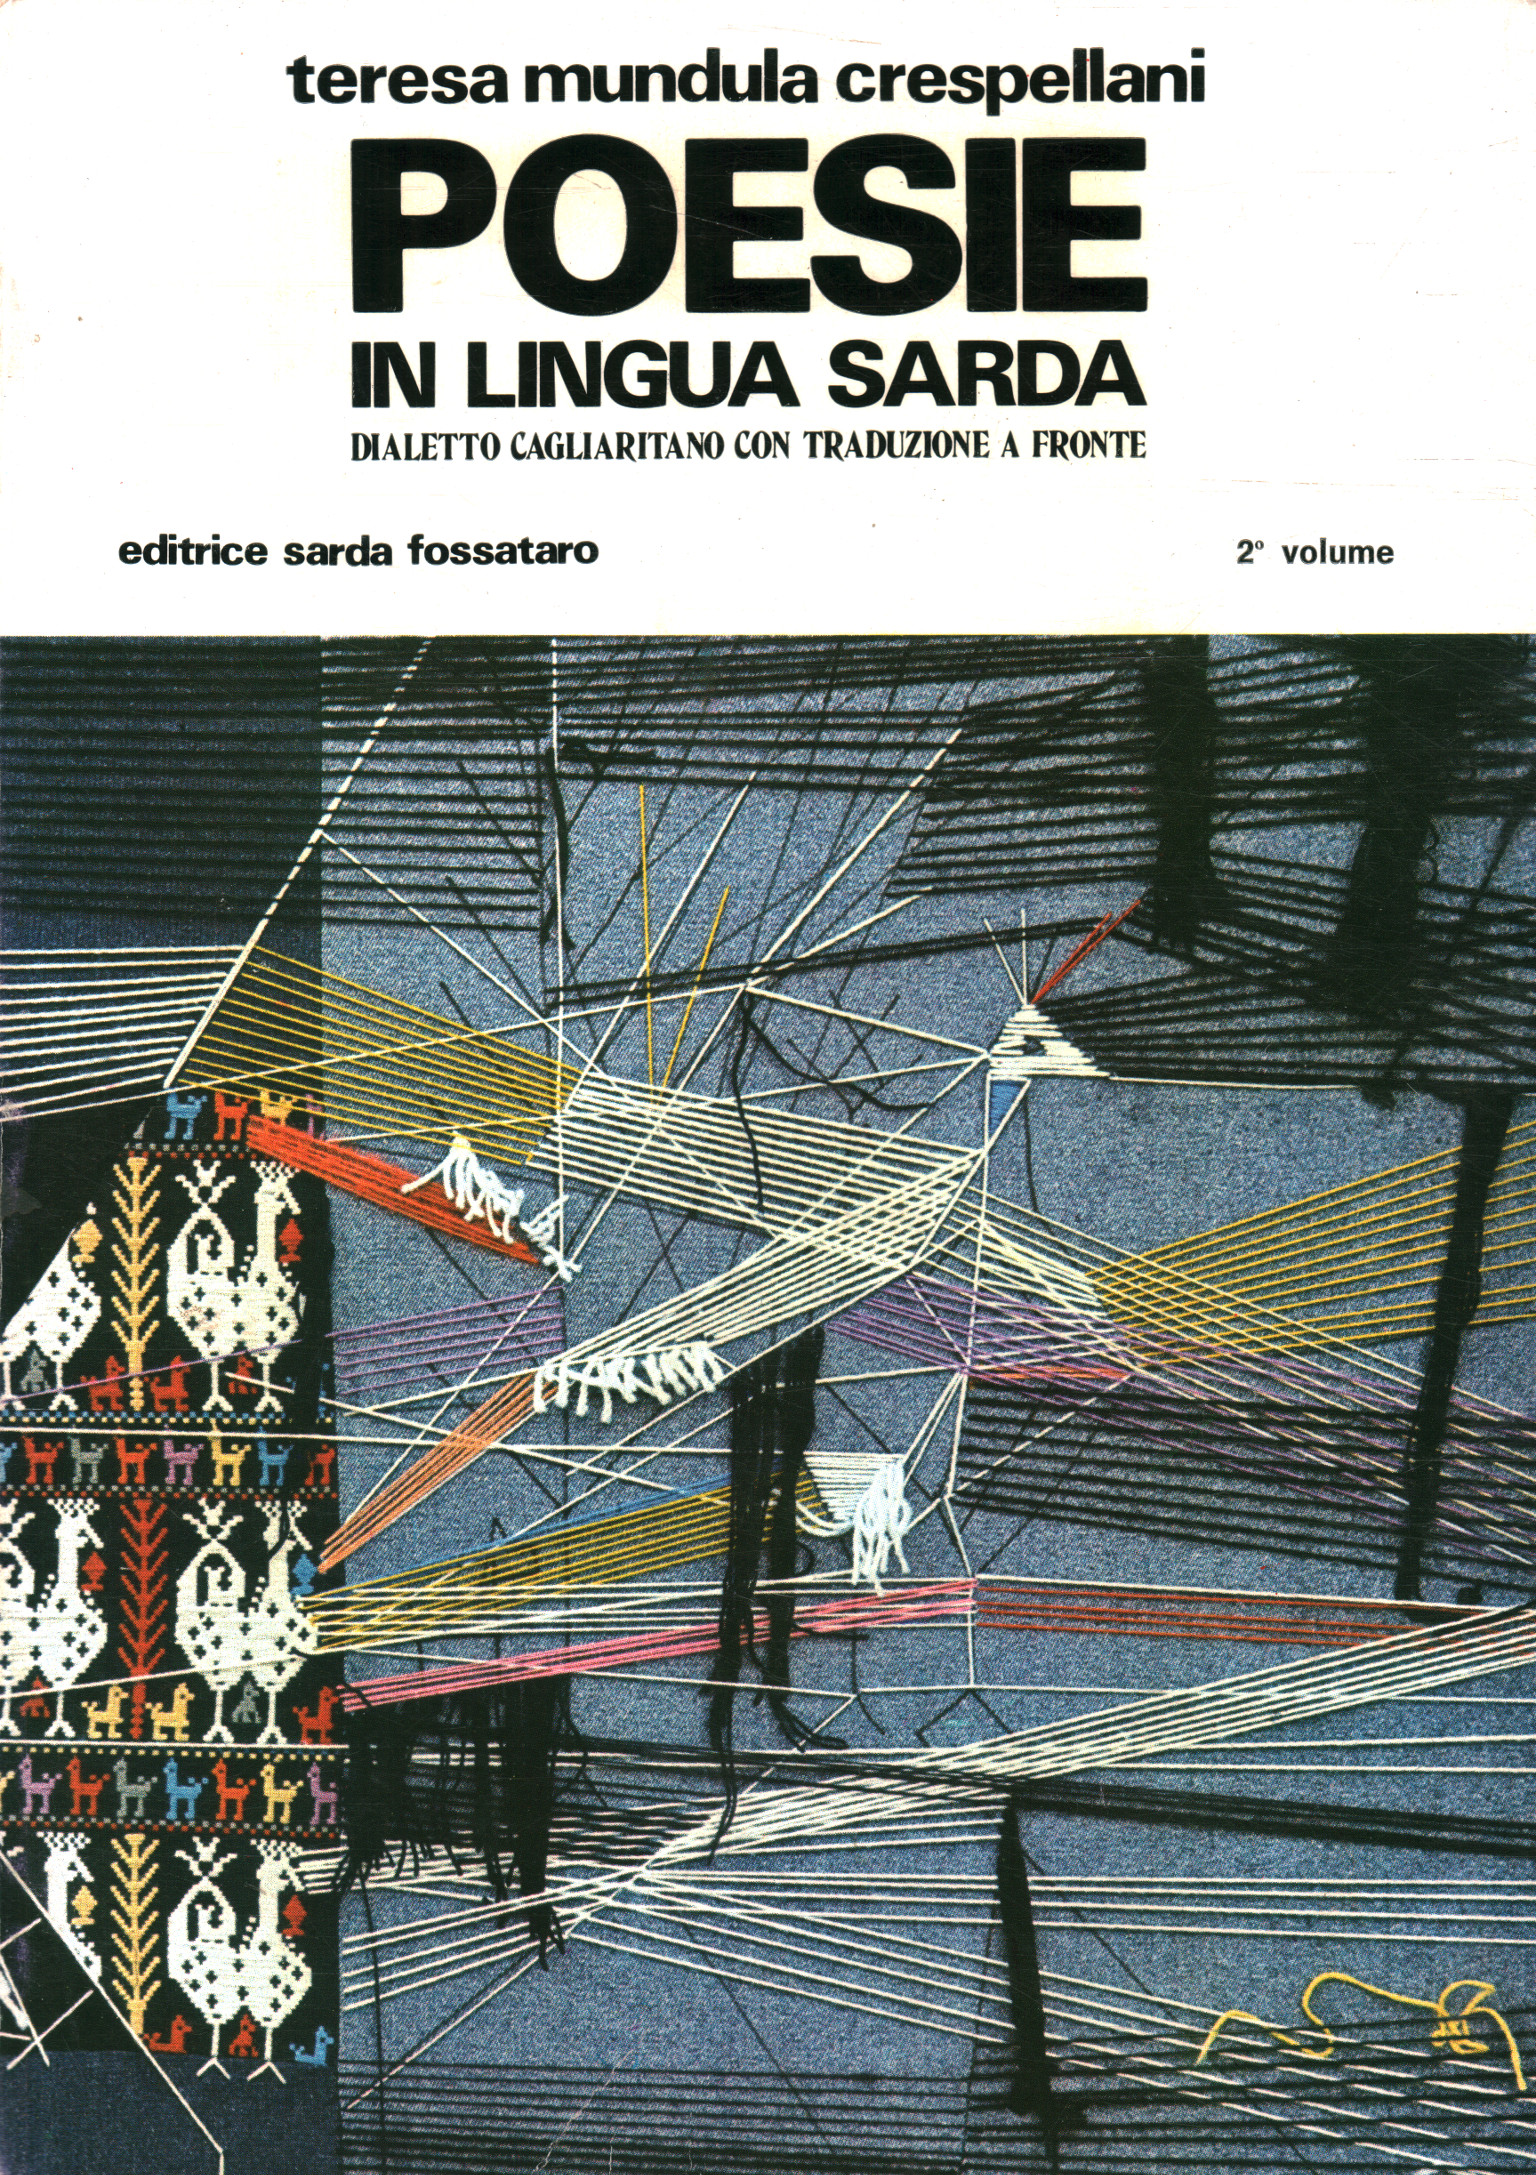 Poems in Sardinian language